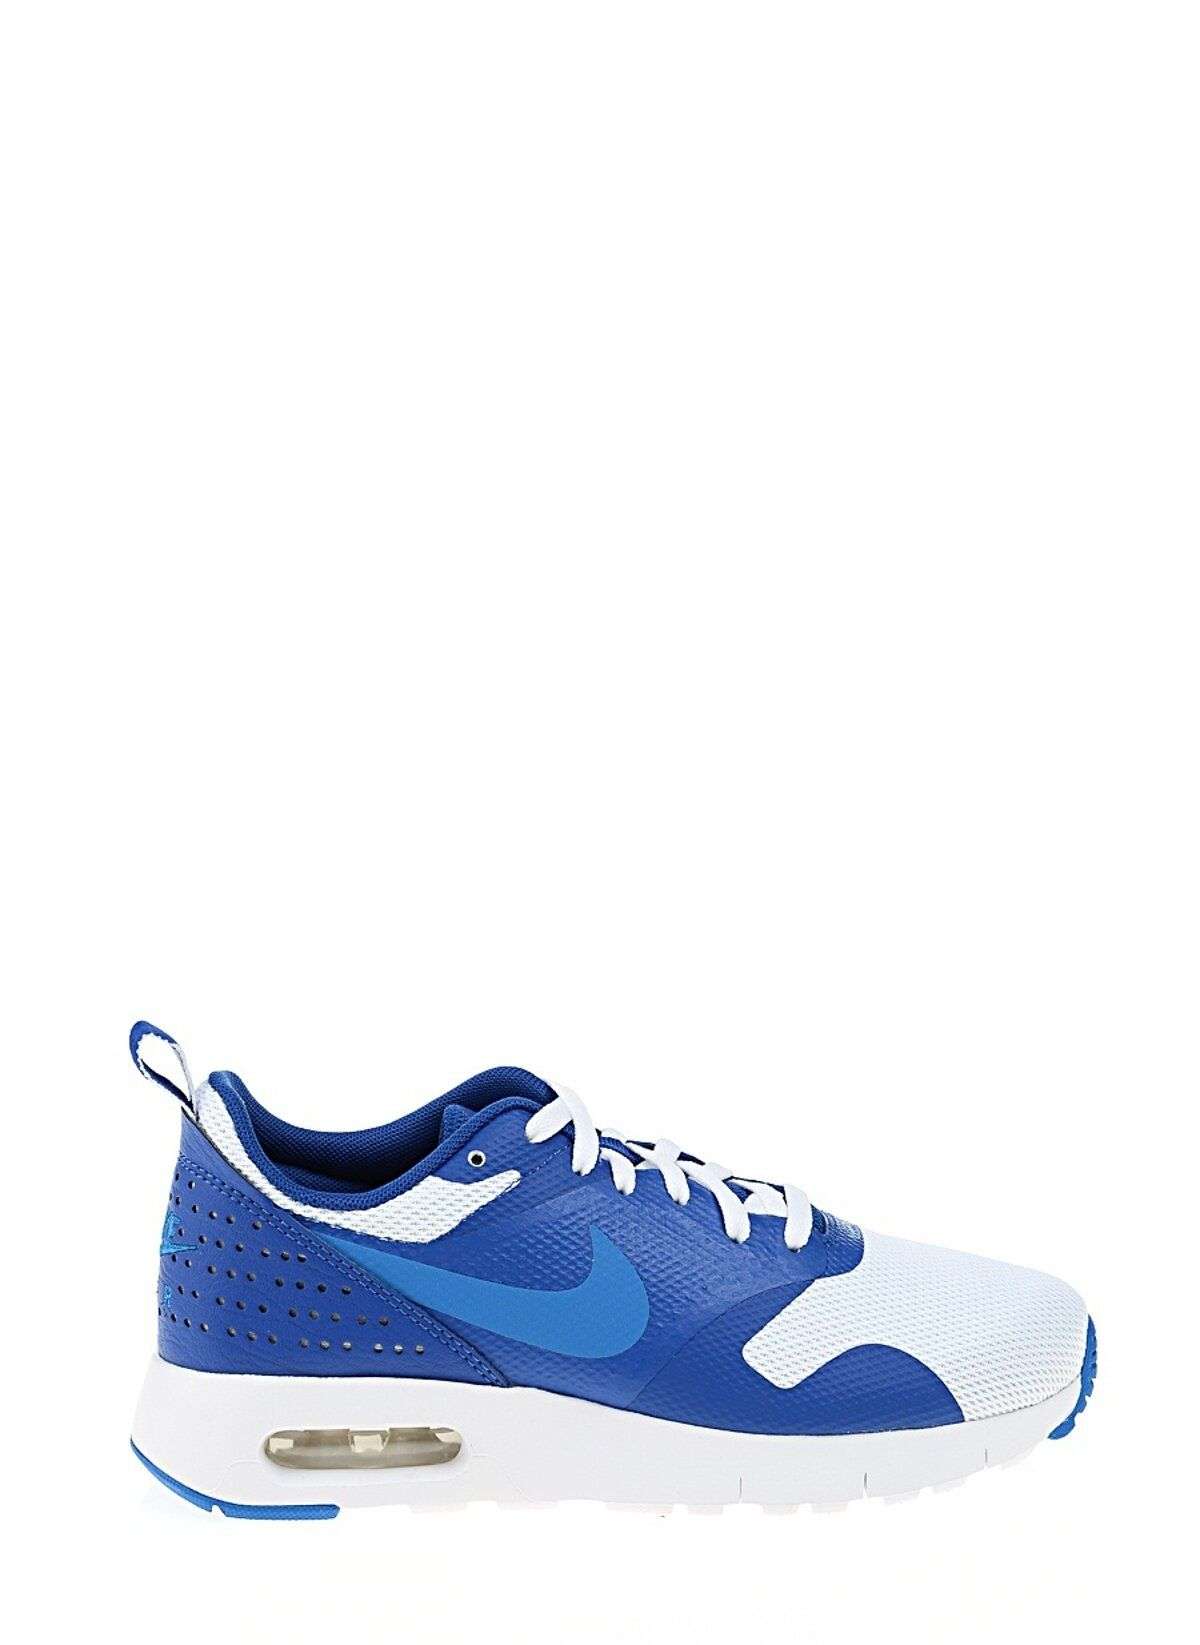 Nike 814443-102 Air Max Tavas Bayan Spor Ayakkabısı